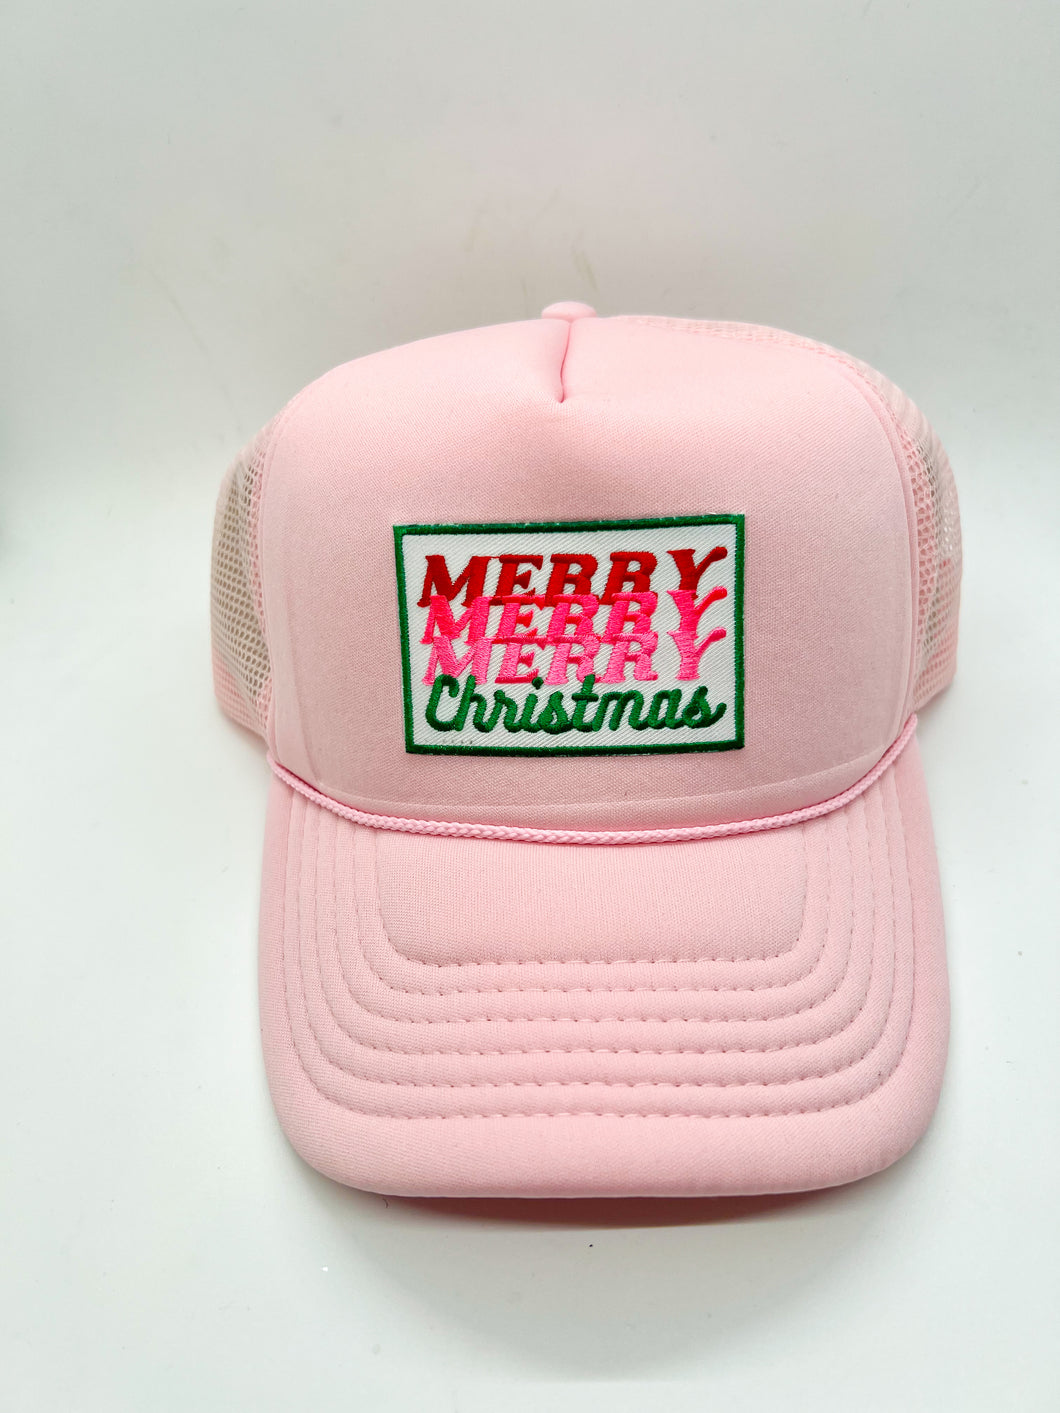 Merry Christmas trucker hat